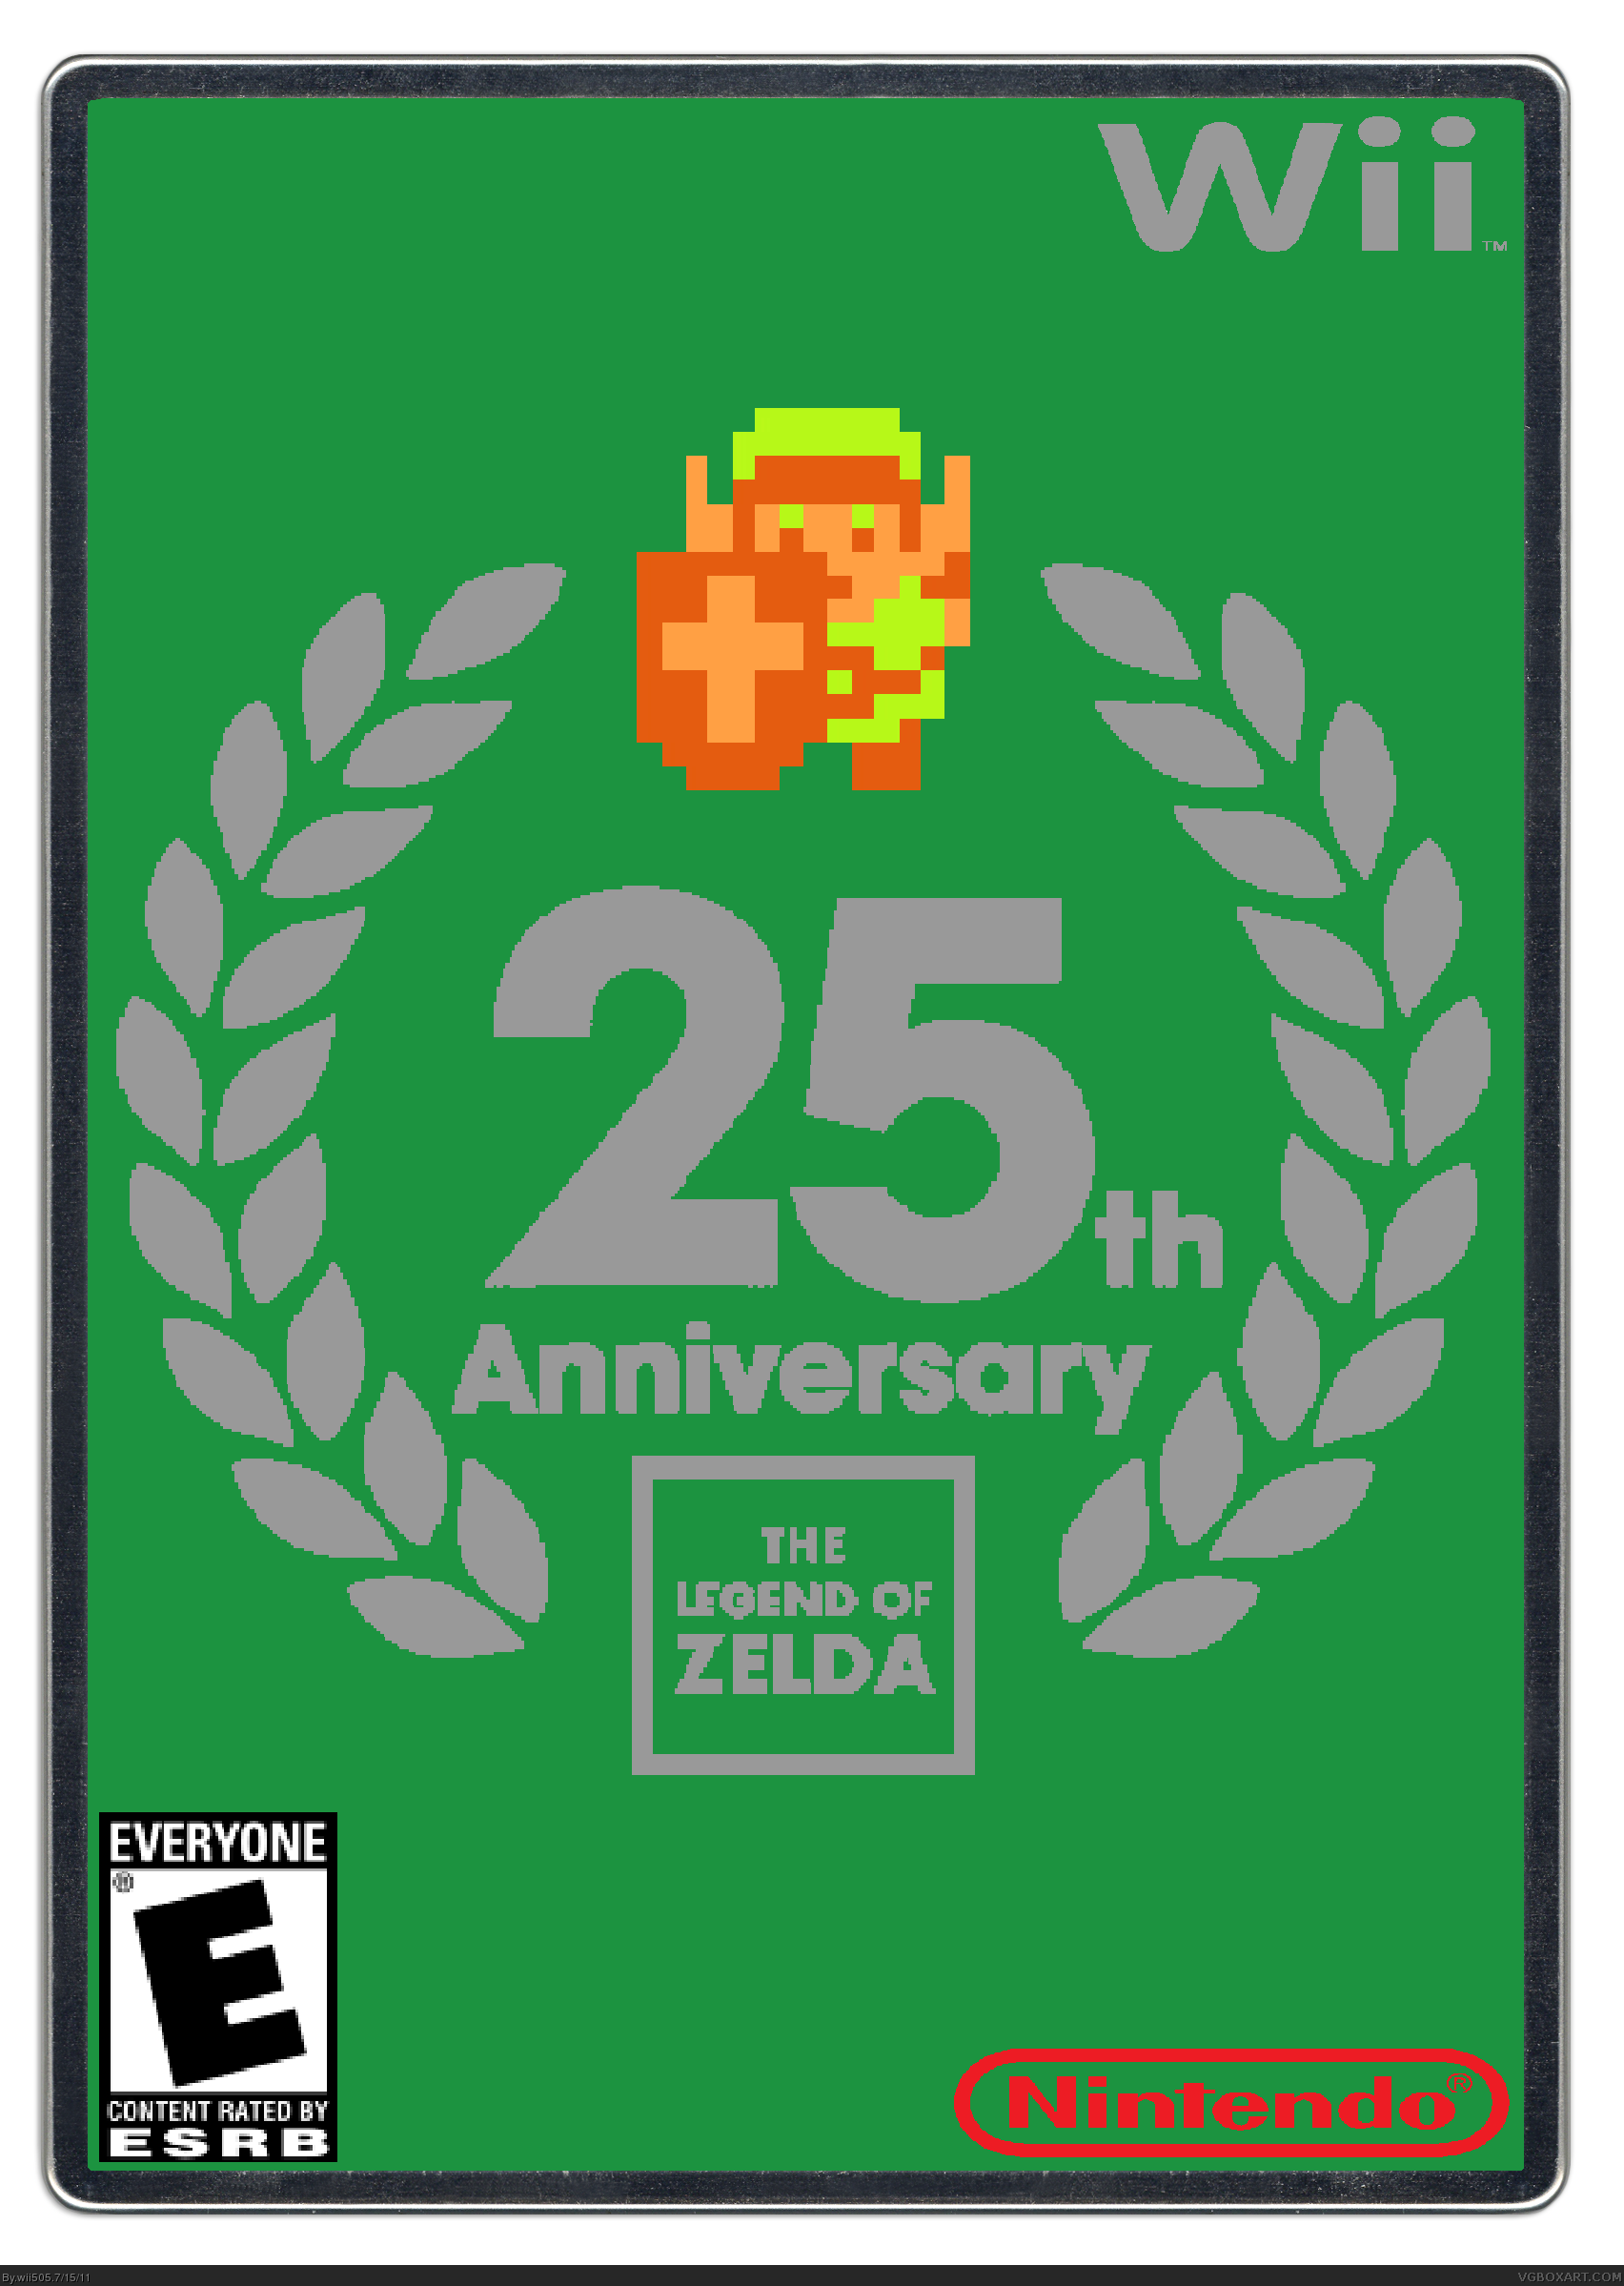 The Legend of Zelda's 25th Anniversary box cover